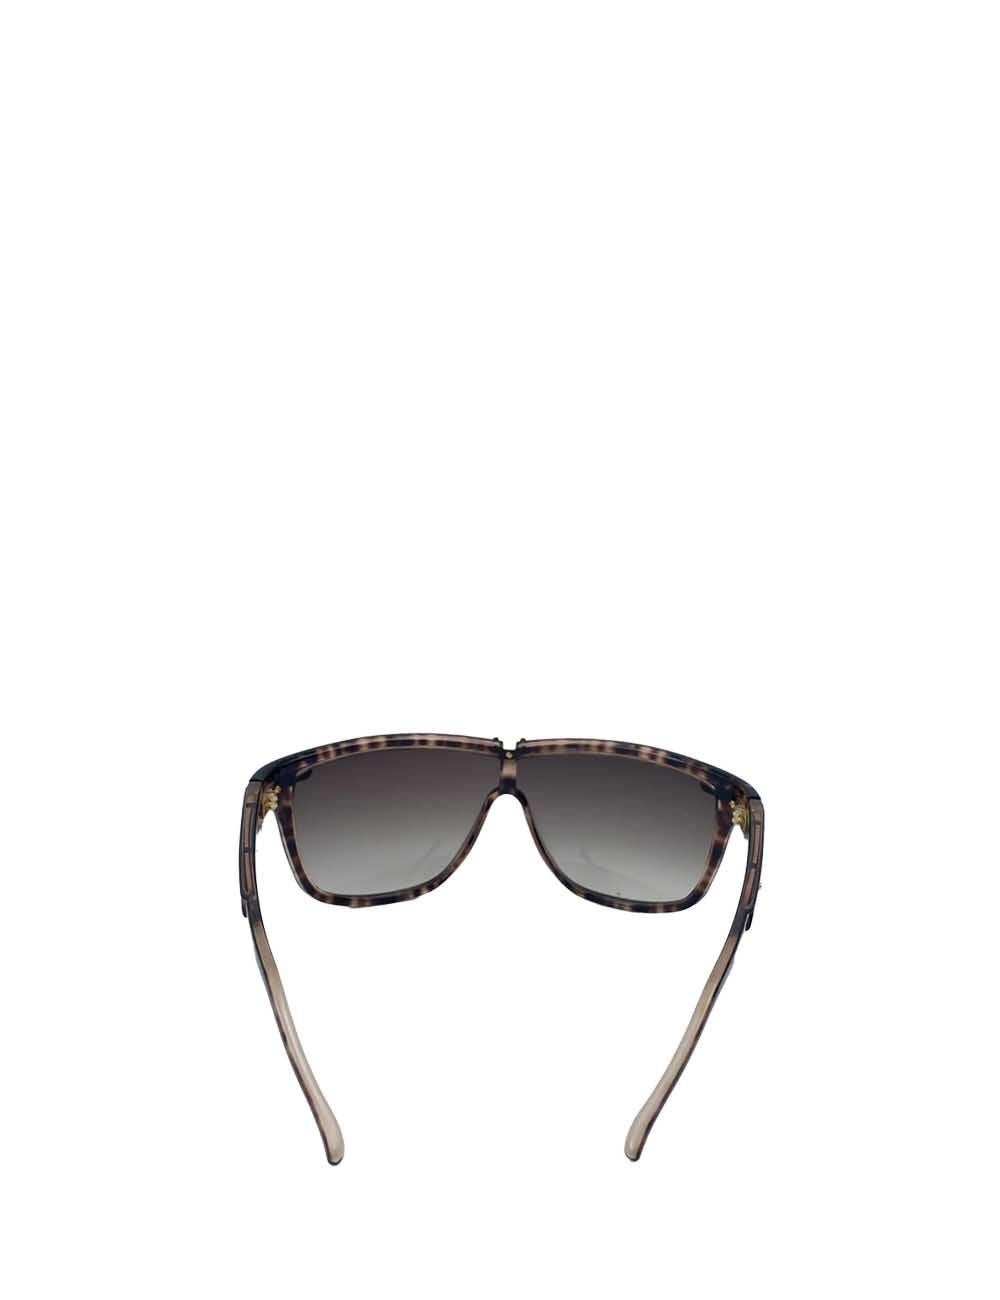 Black Jimmy Choo Tortoise Shell Mirrored-lens Polarized Aviator Sunglasses